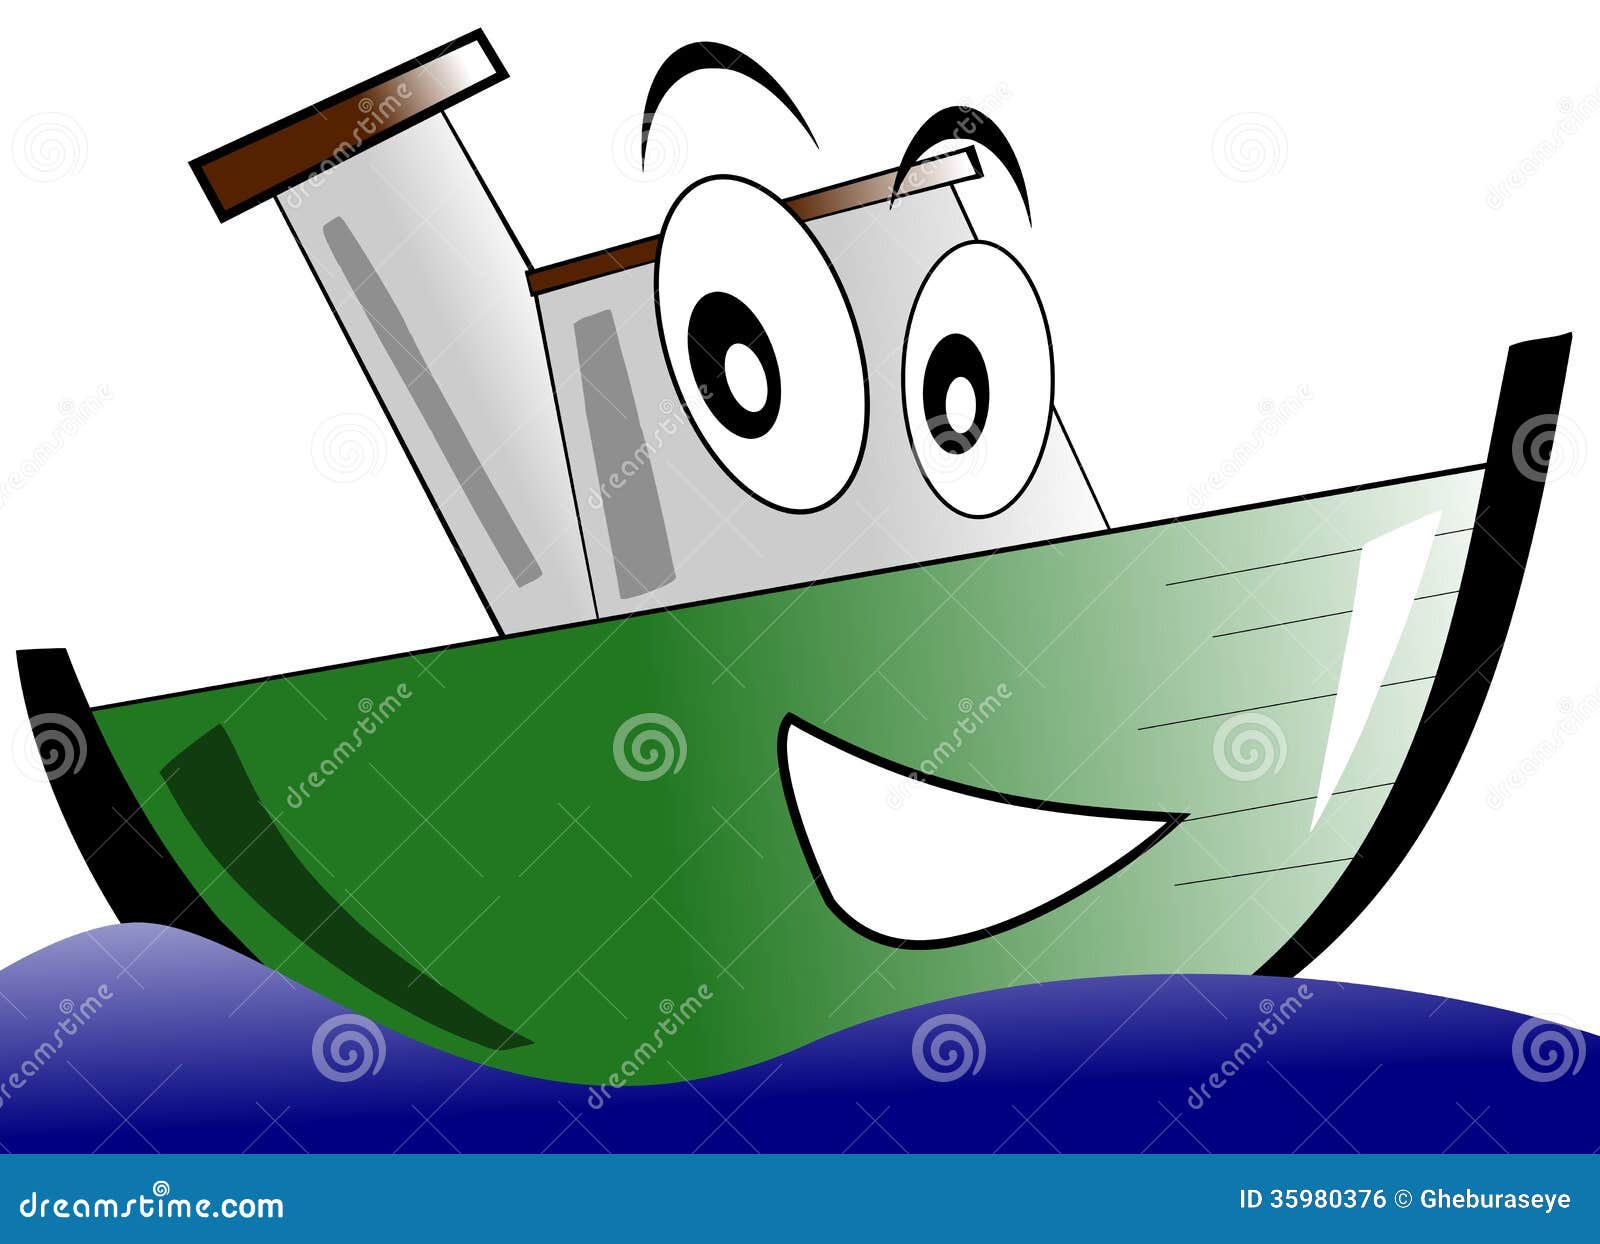 Smiling Isolated Cartoon Boat Royalty Free Stock Image ...